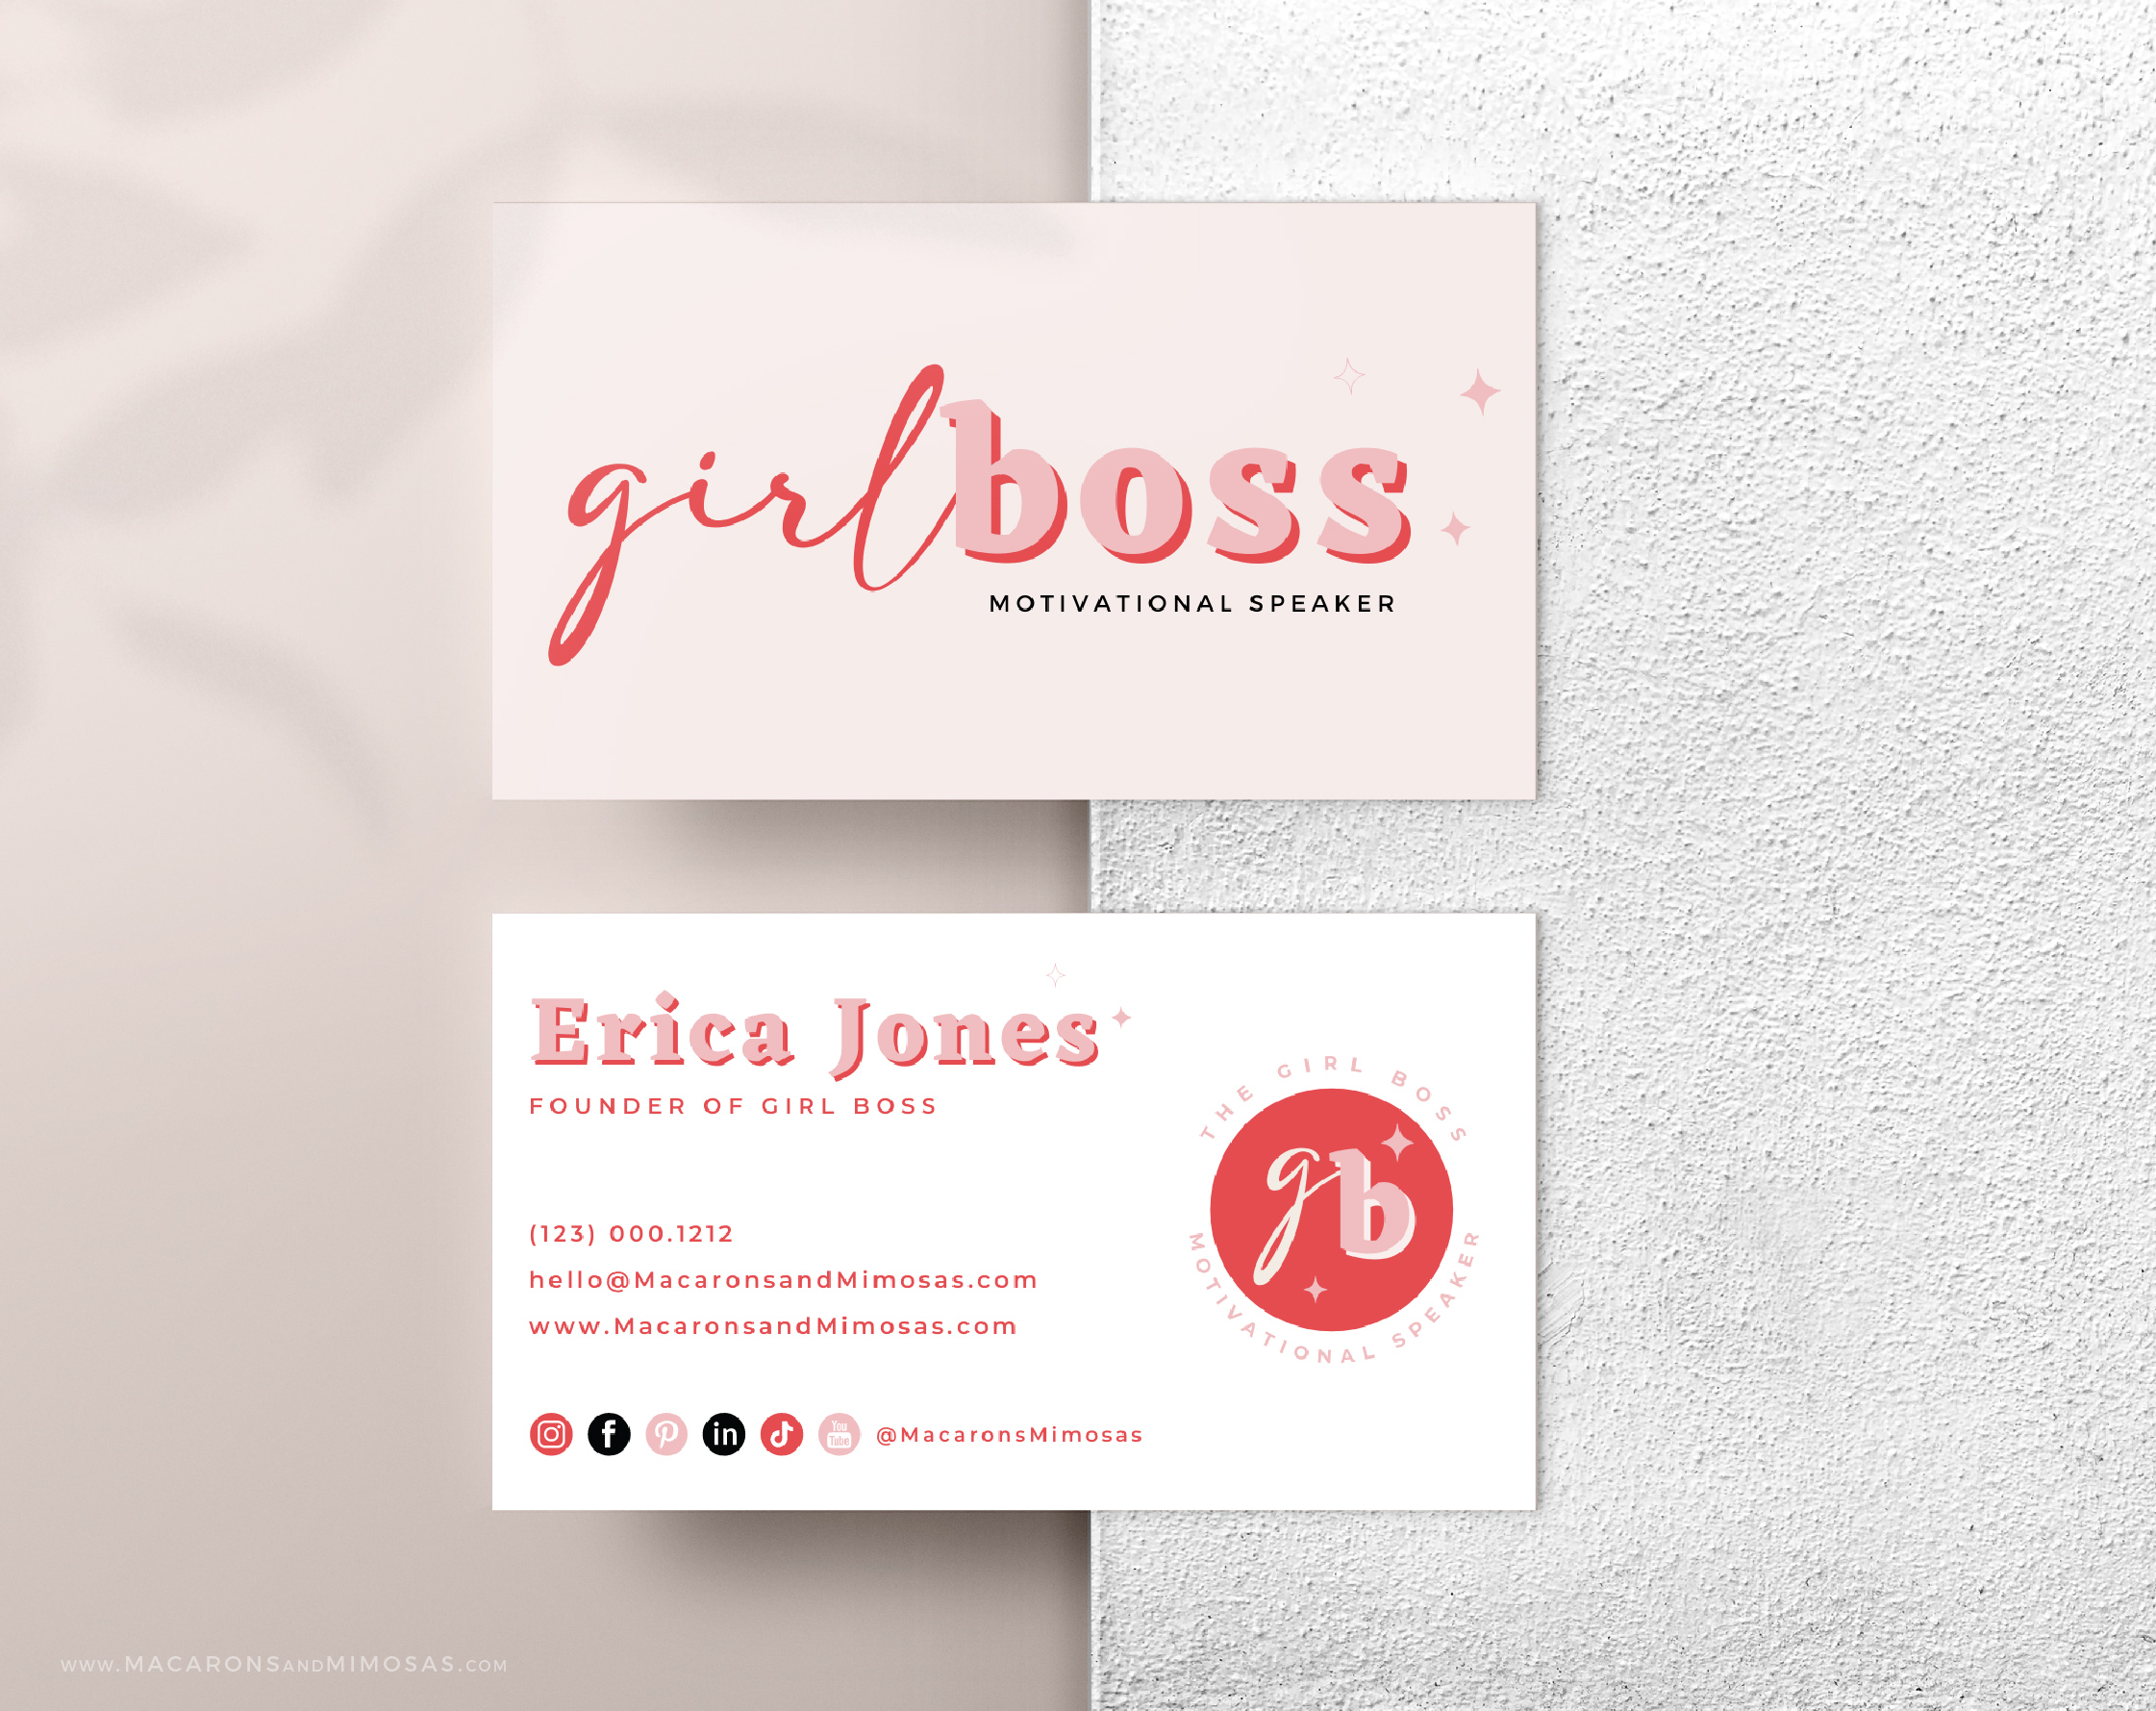 Lady Boss Semi-Custom Brand Design for Female Entrepreneurs. Premade business card designs include Pink Canva Logo templates!